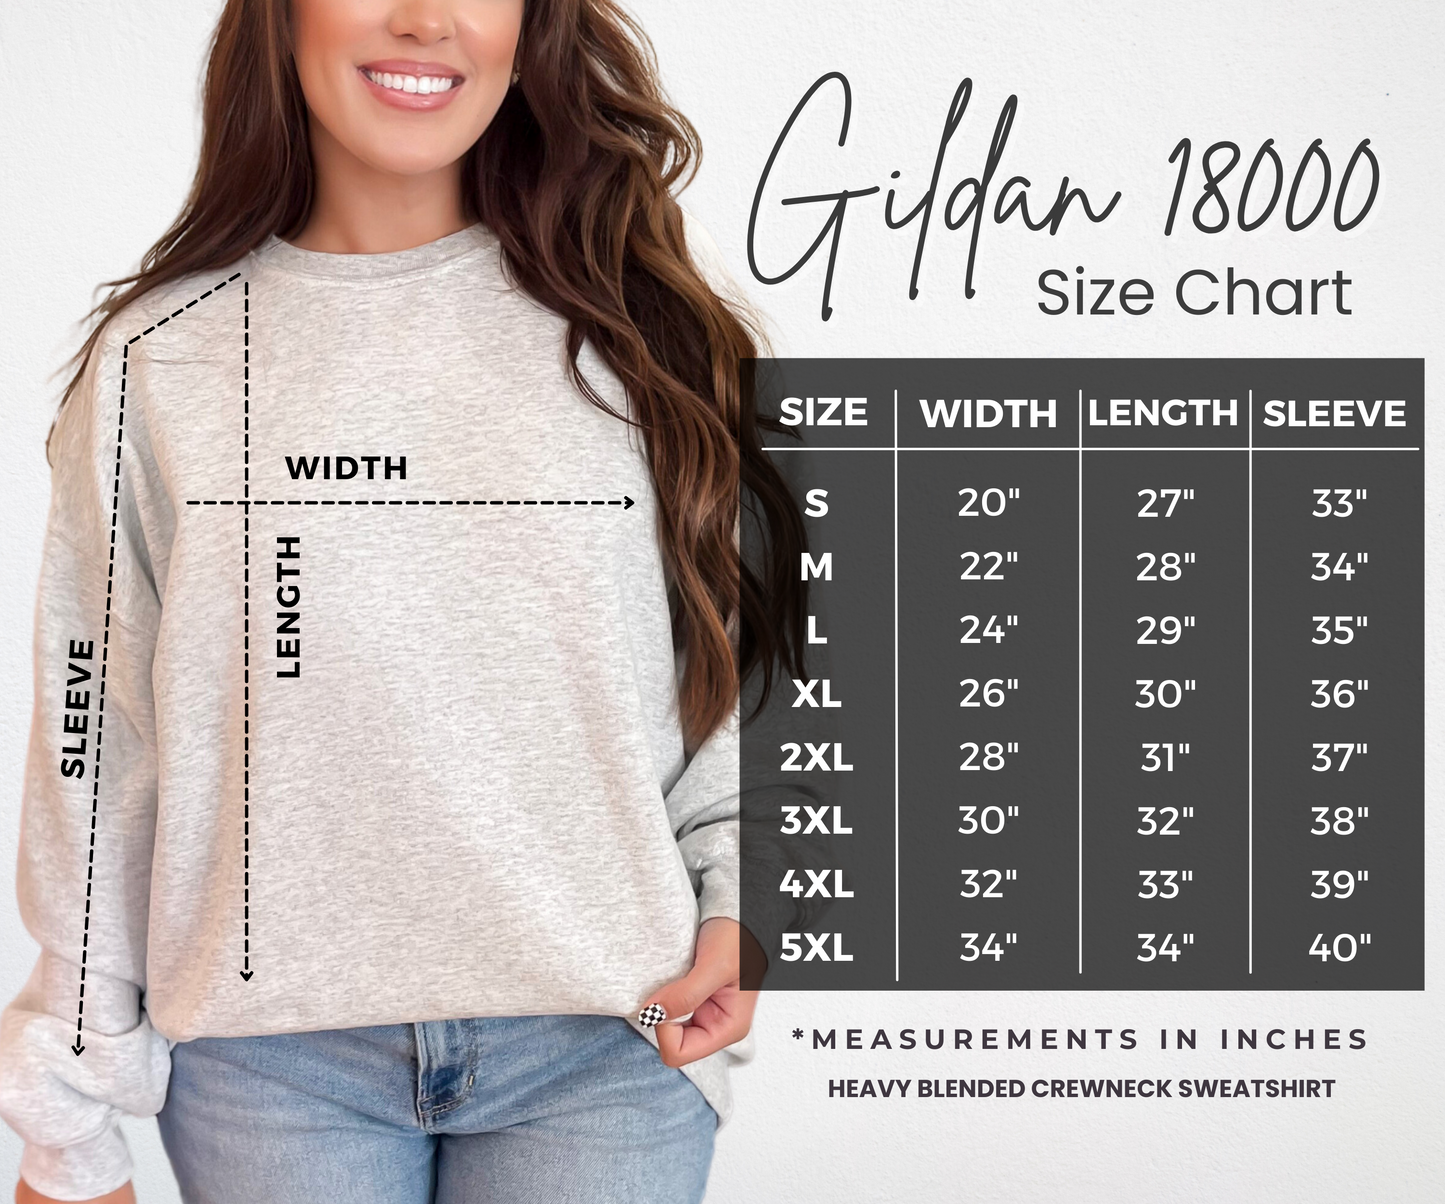 La Sad Girl Sweater/Shirt